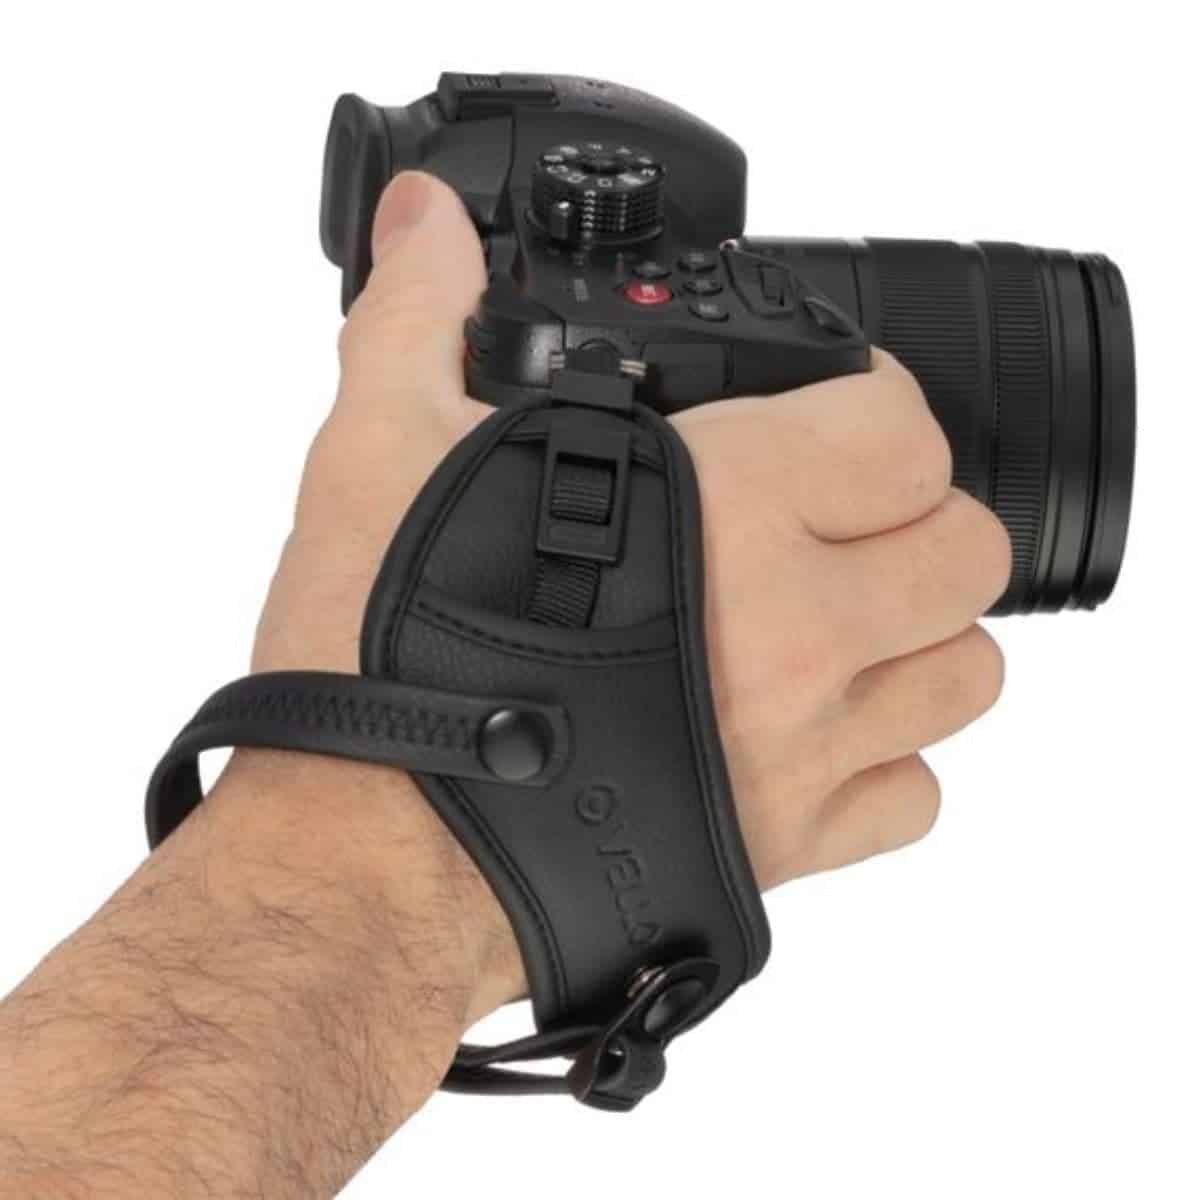 Hand with a Vello camera hand strap.